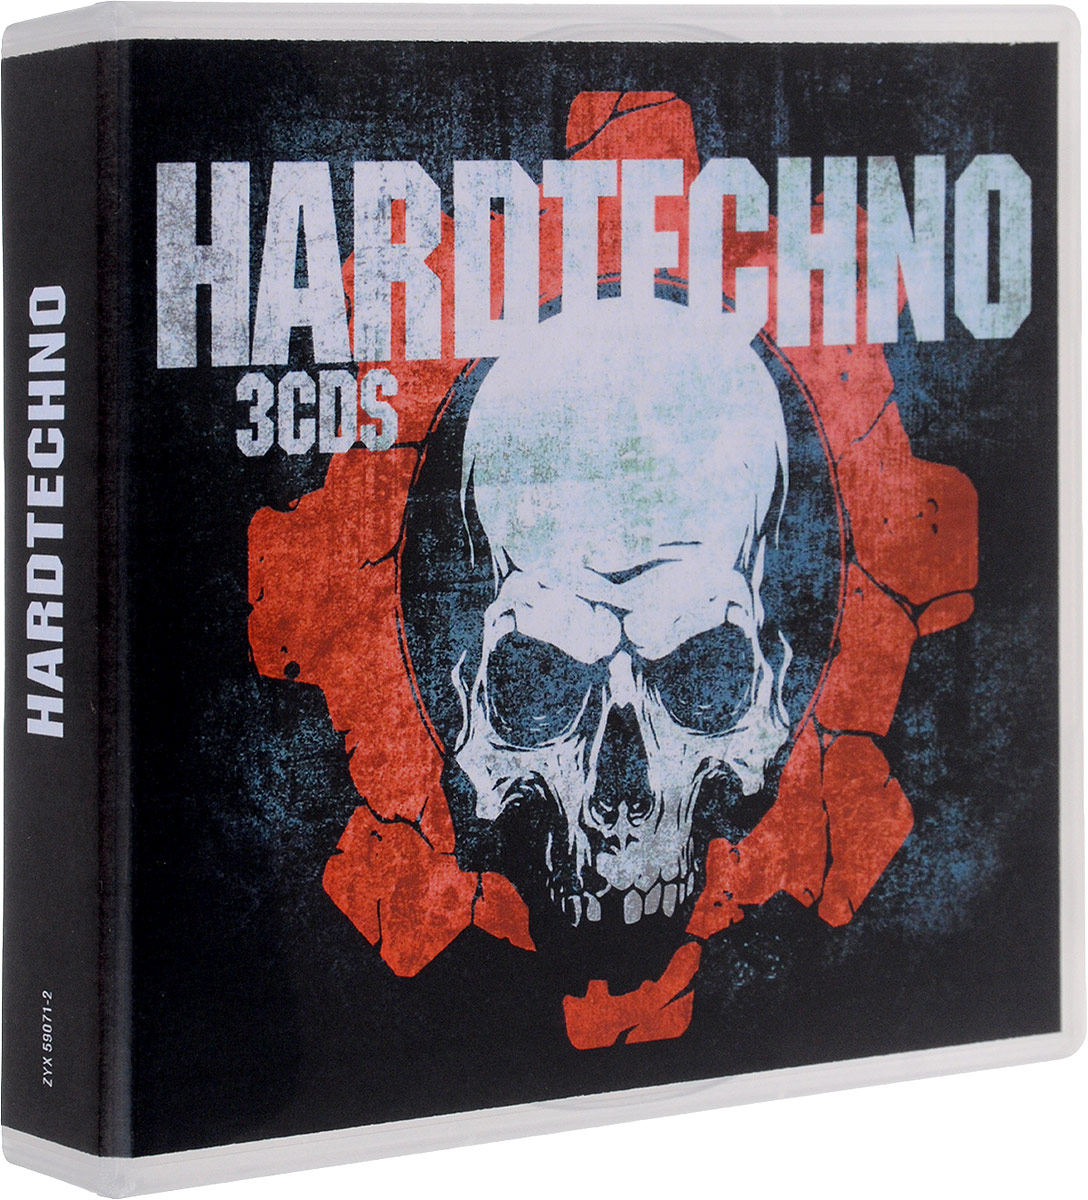 Hardtechno (3 CD)